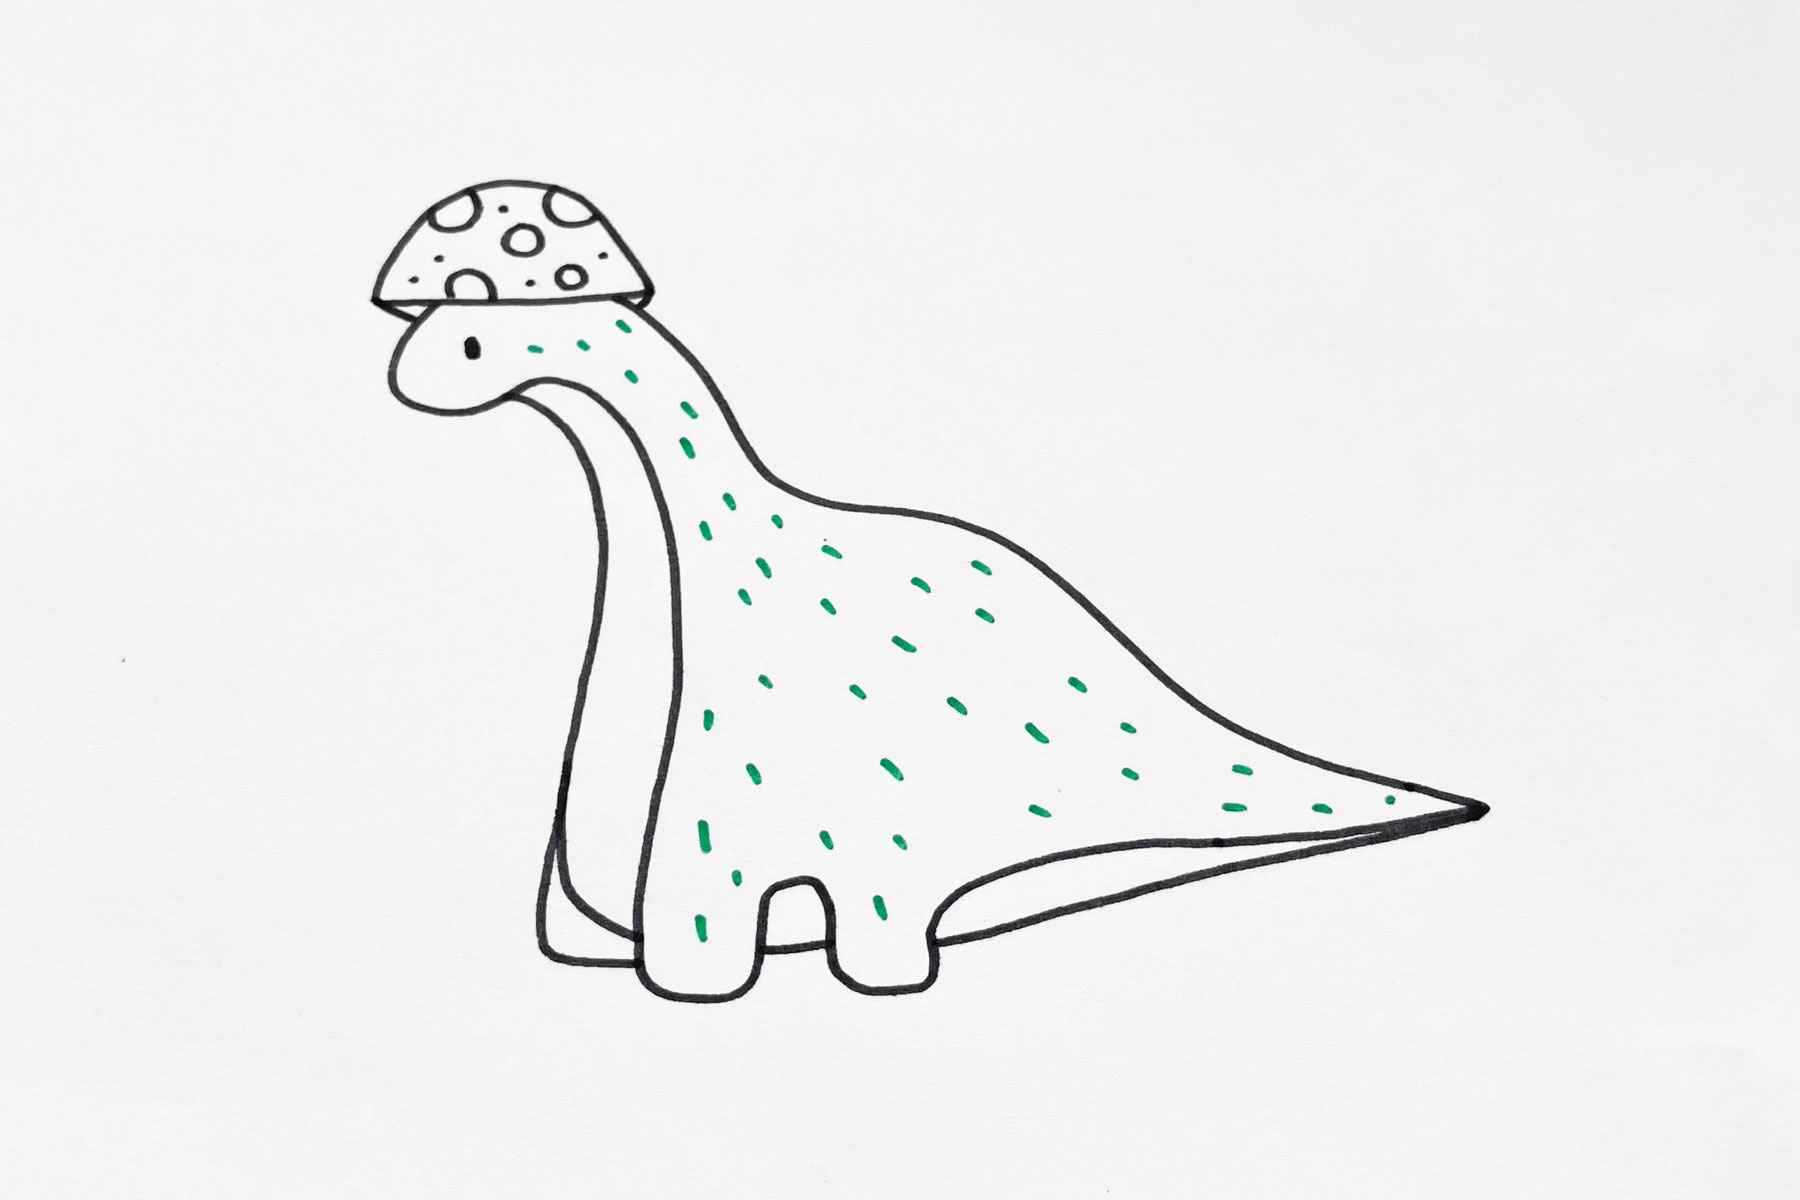 Funghi Dinosaur drawing